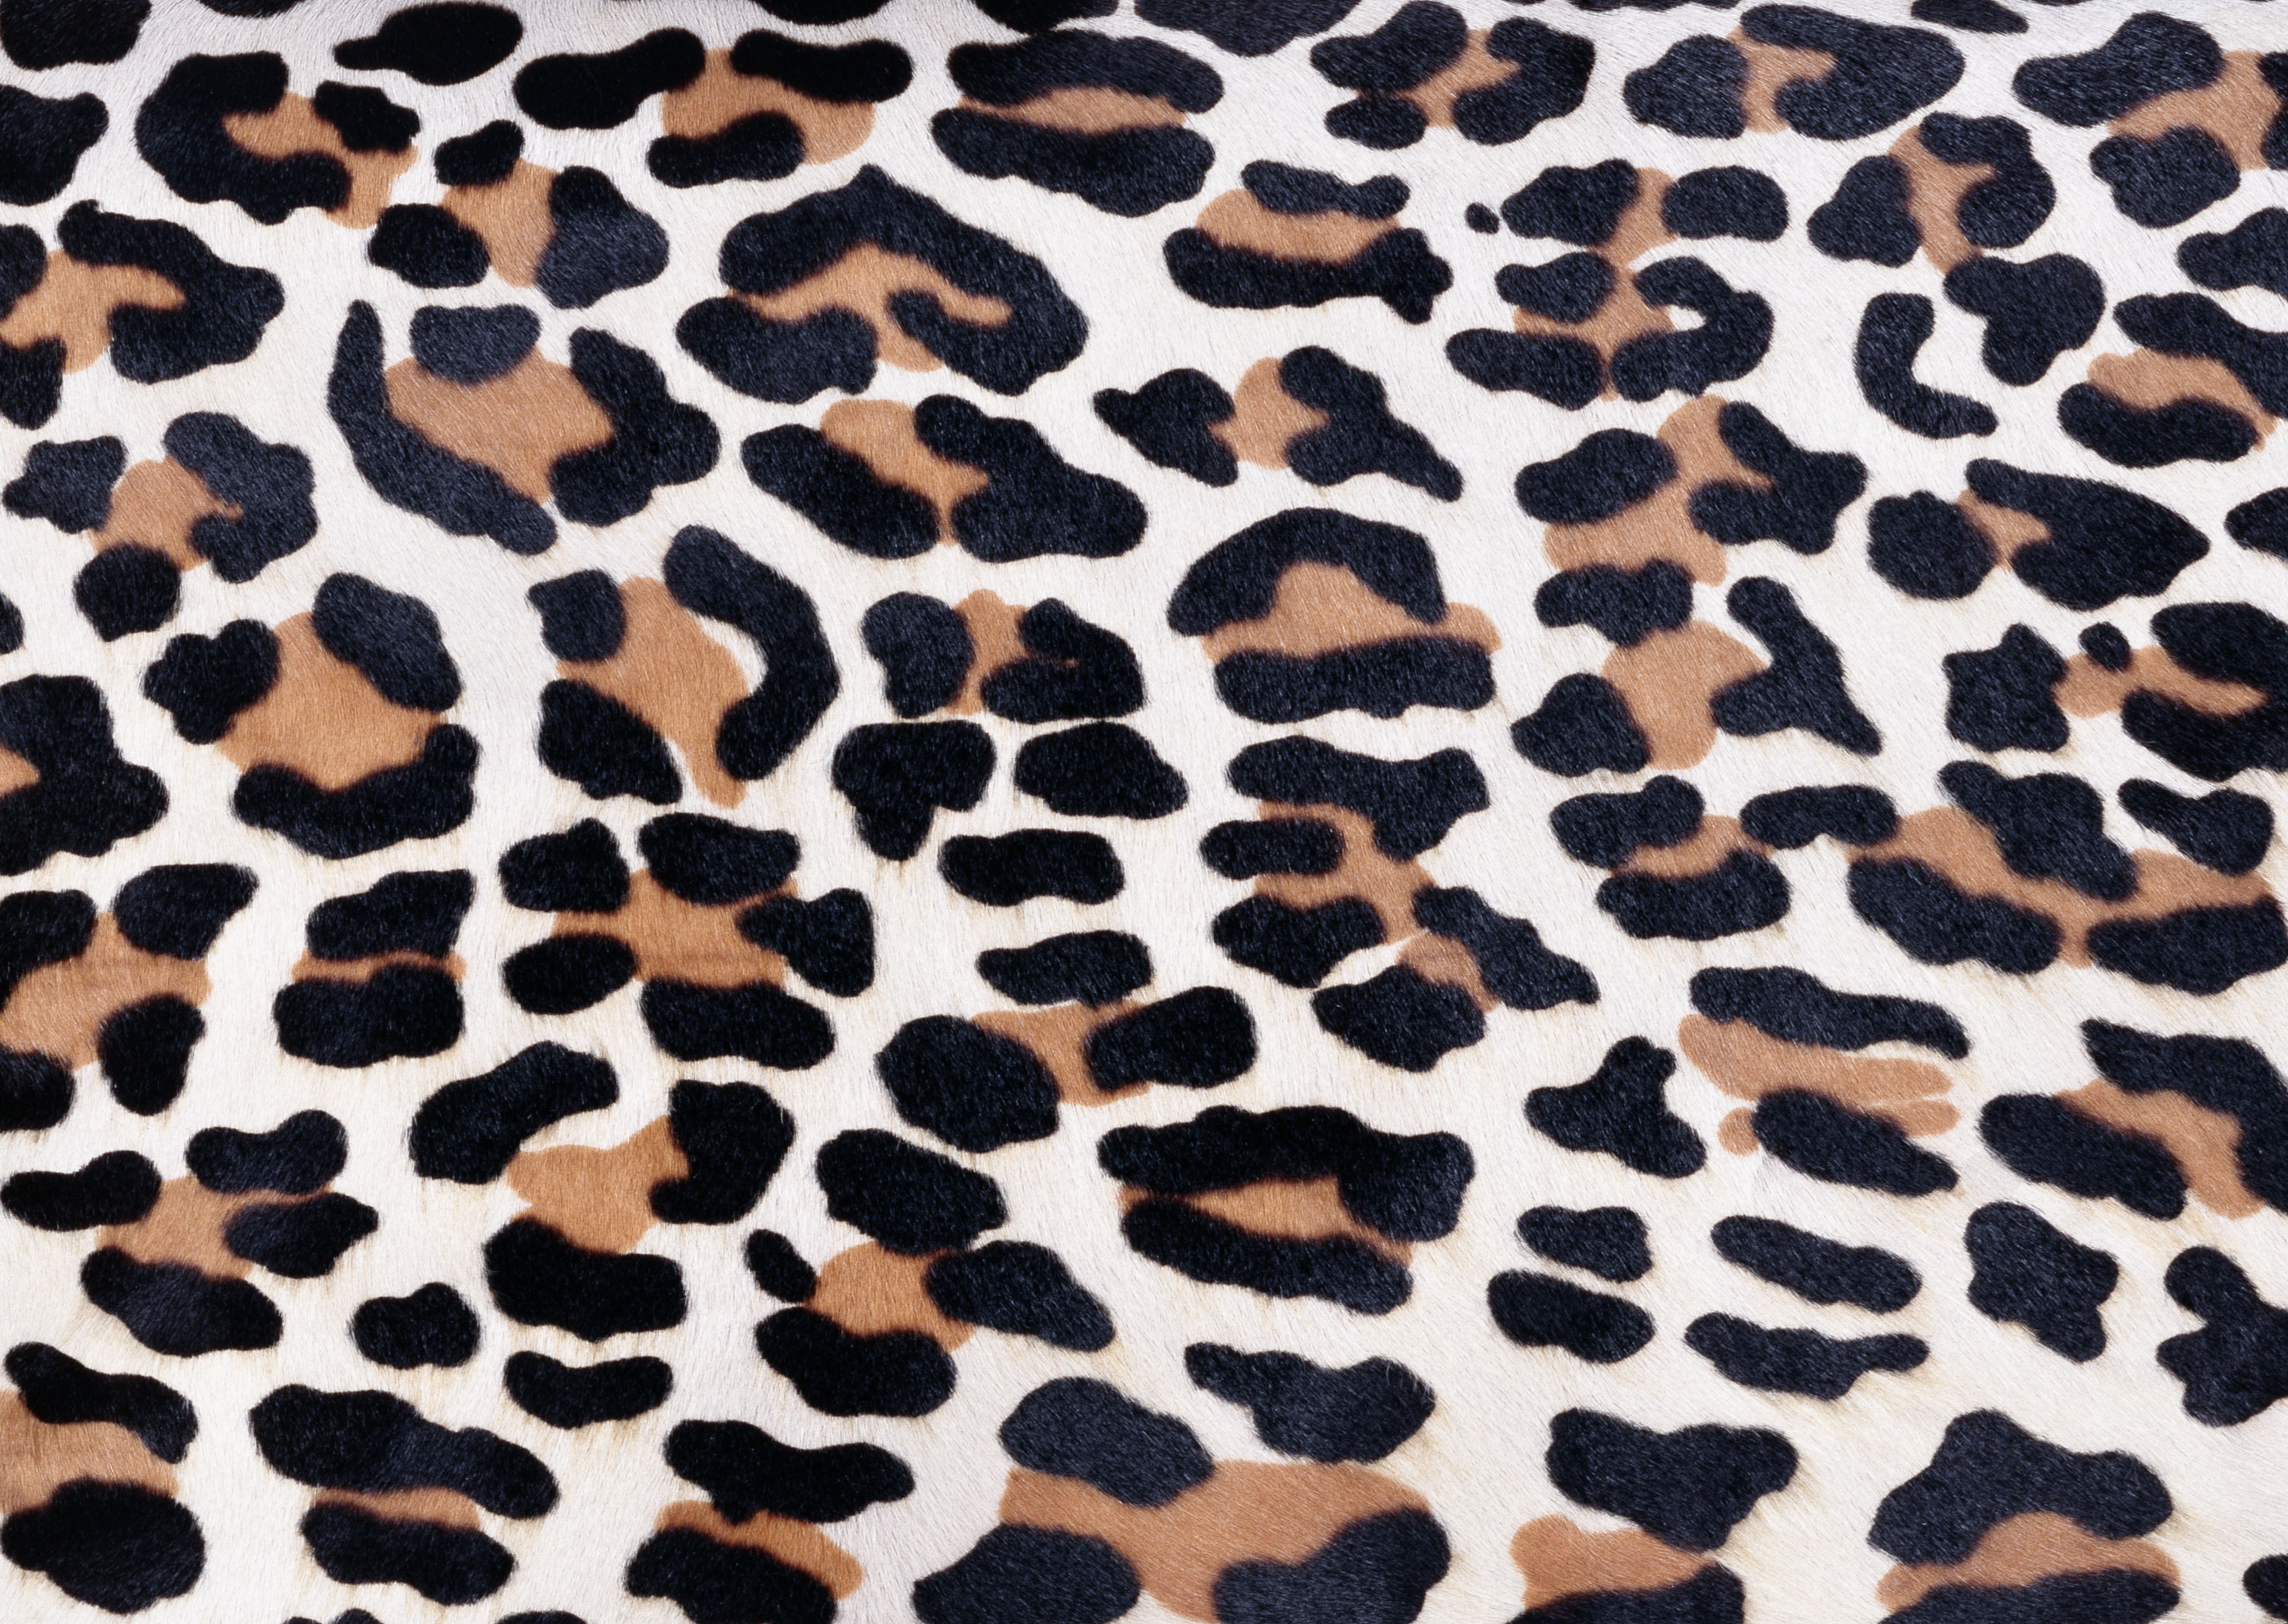 Leopard fur texture background image